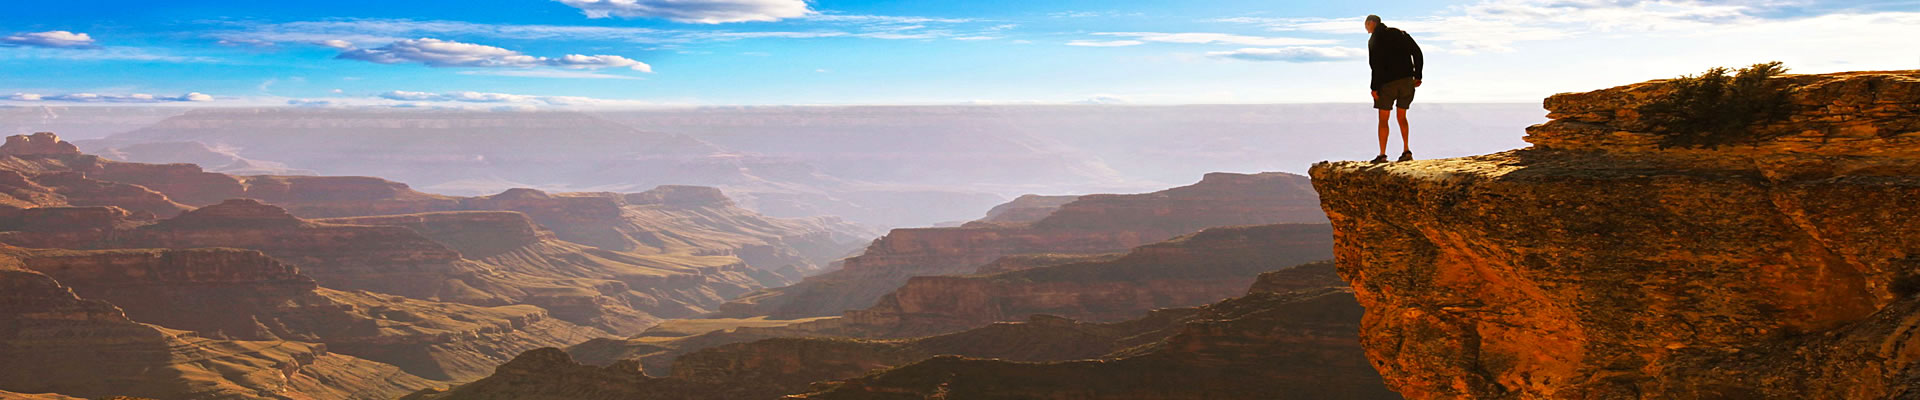 Sconto sui tour del Grand Canyon